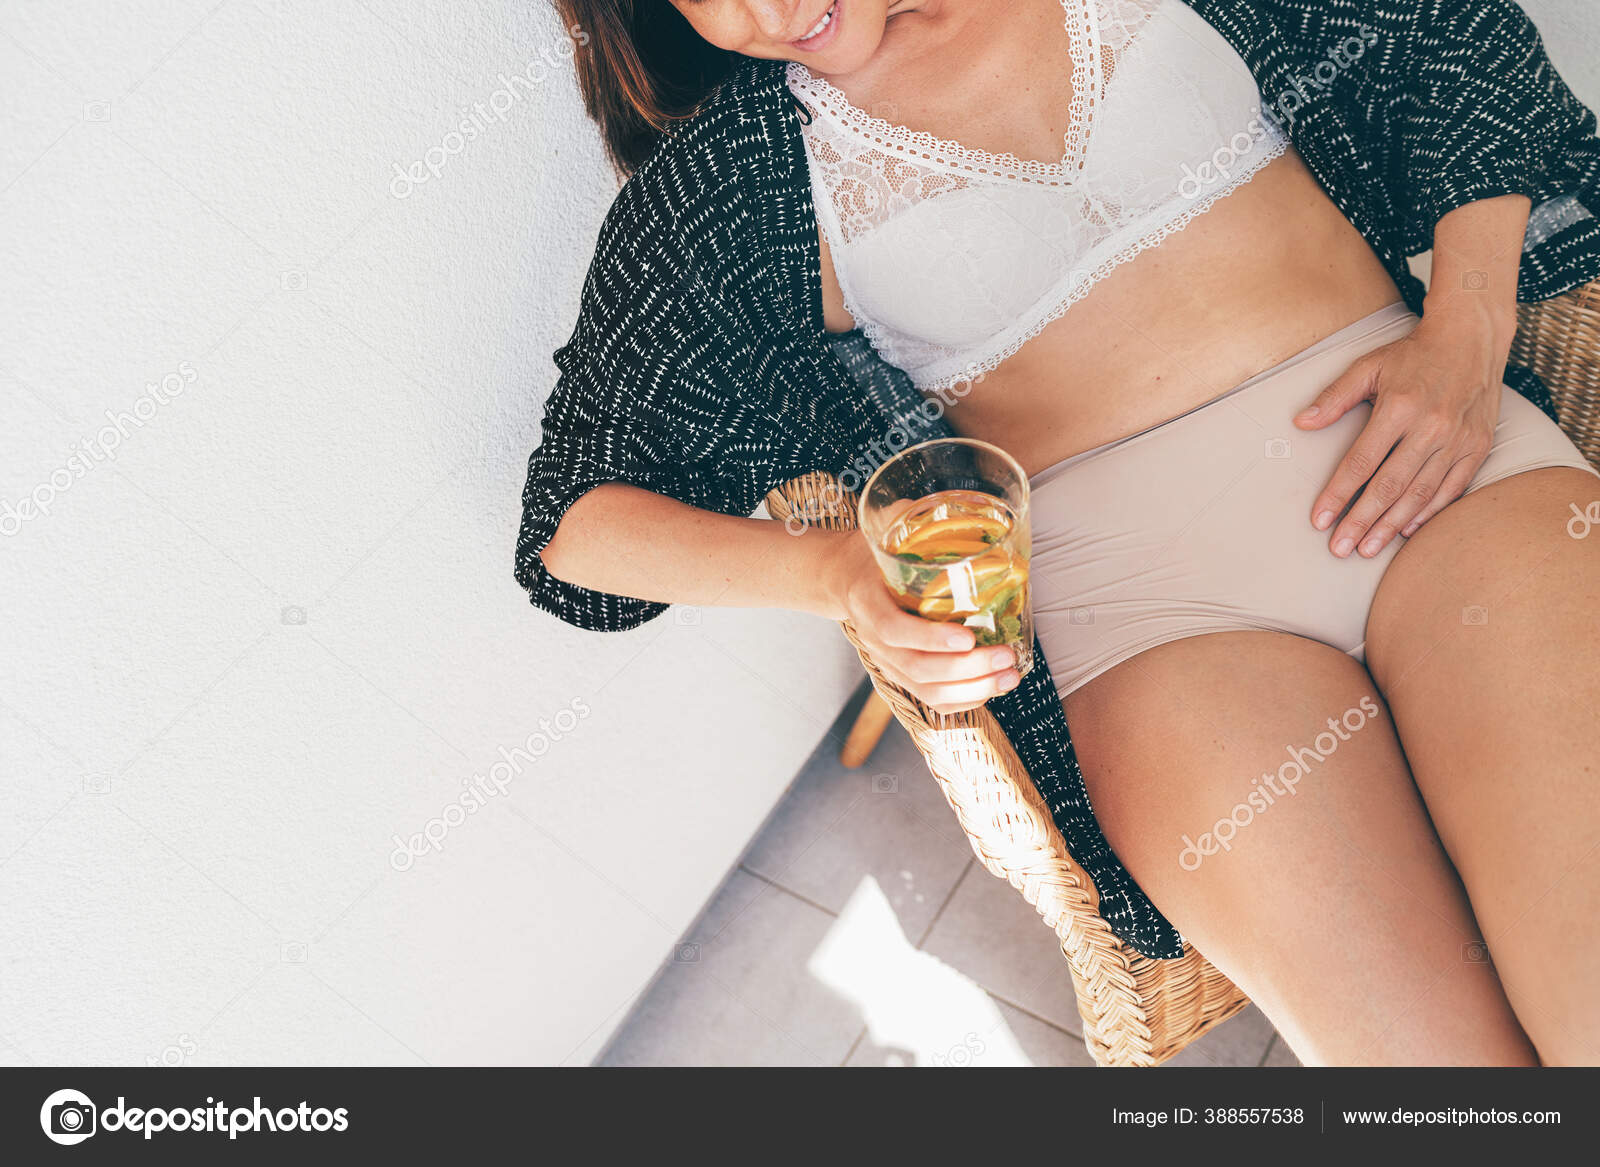 Beautiful Woman Sitting Wearing Lingerie Bra and Panties Stock